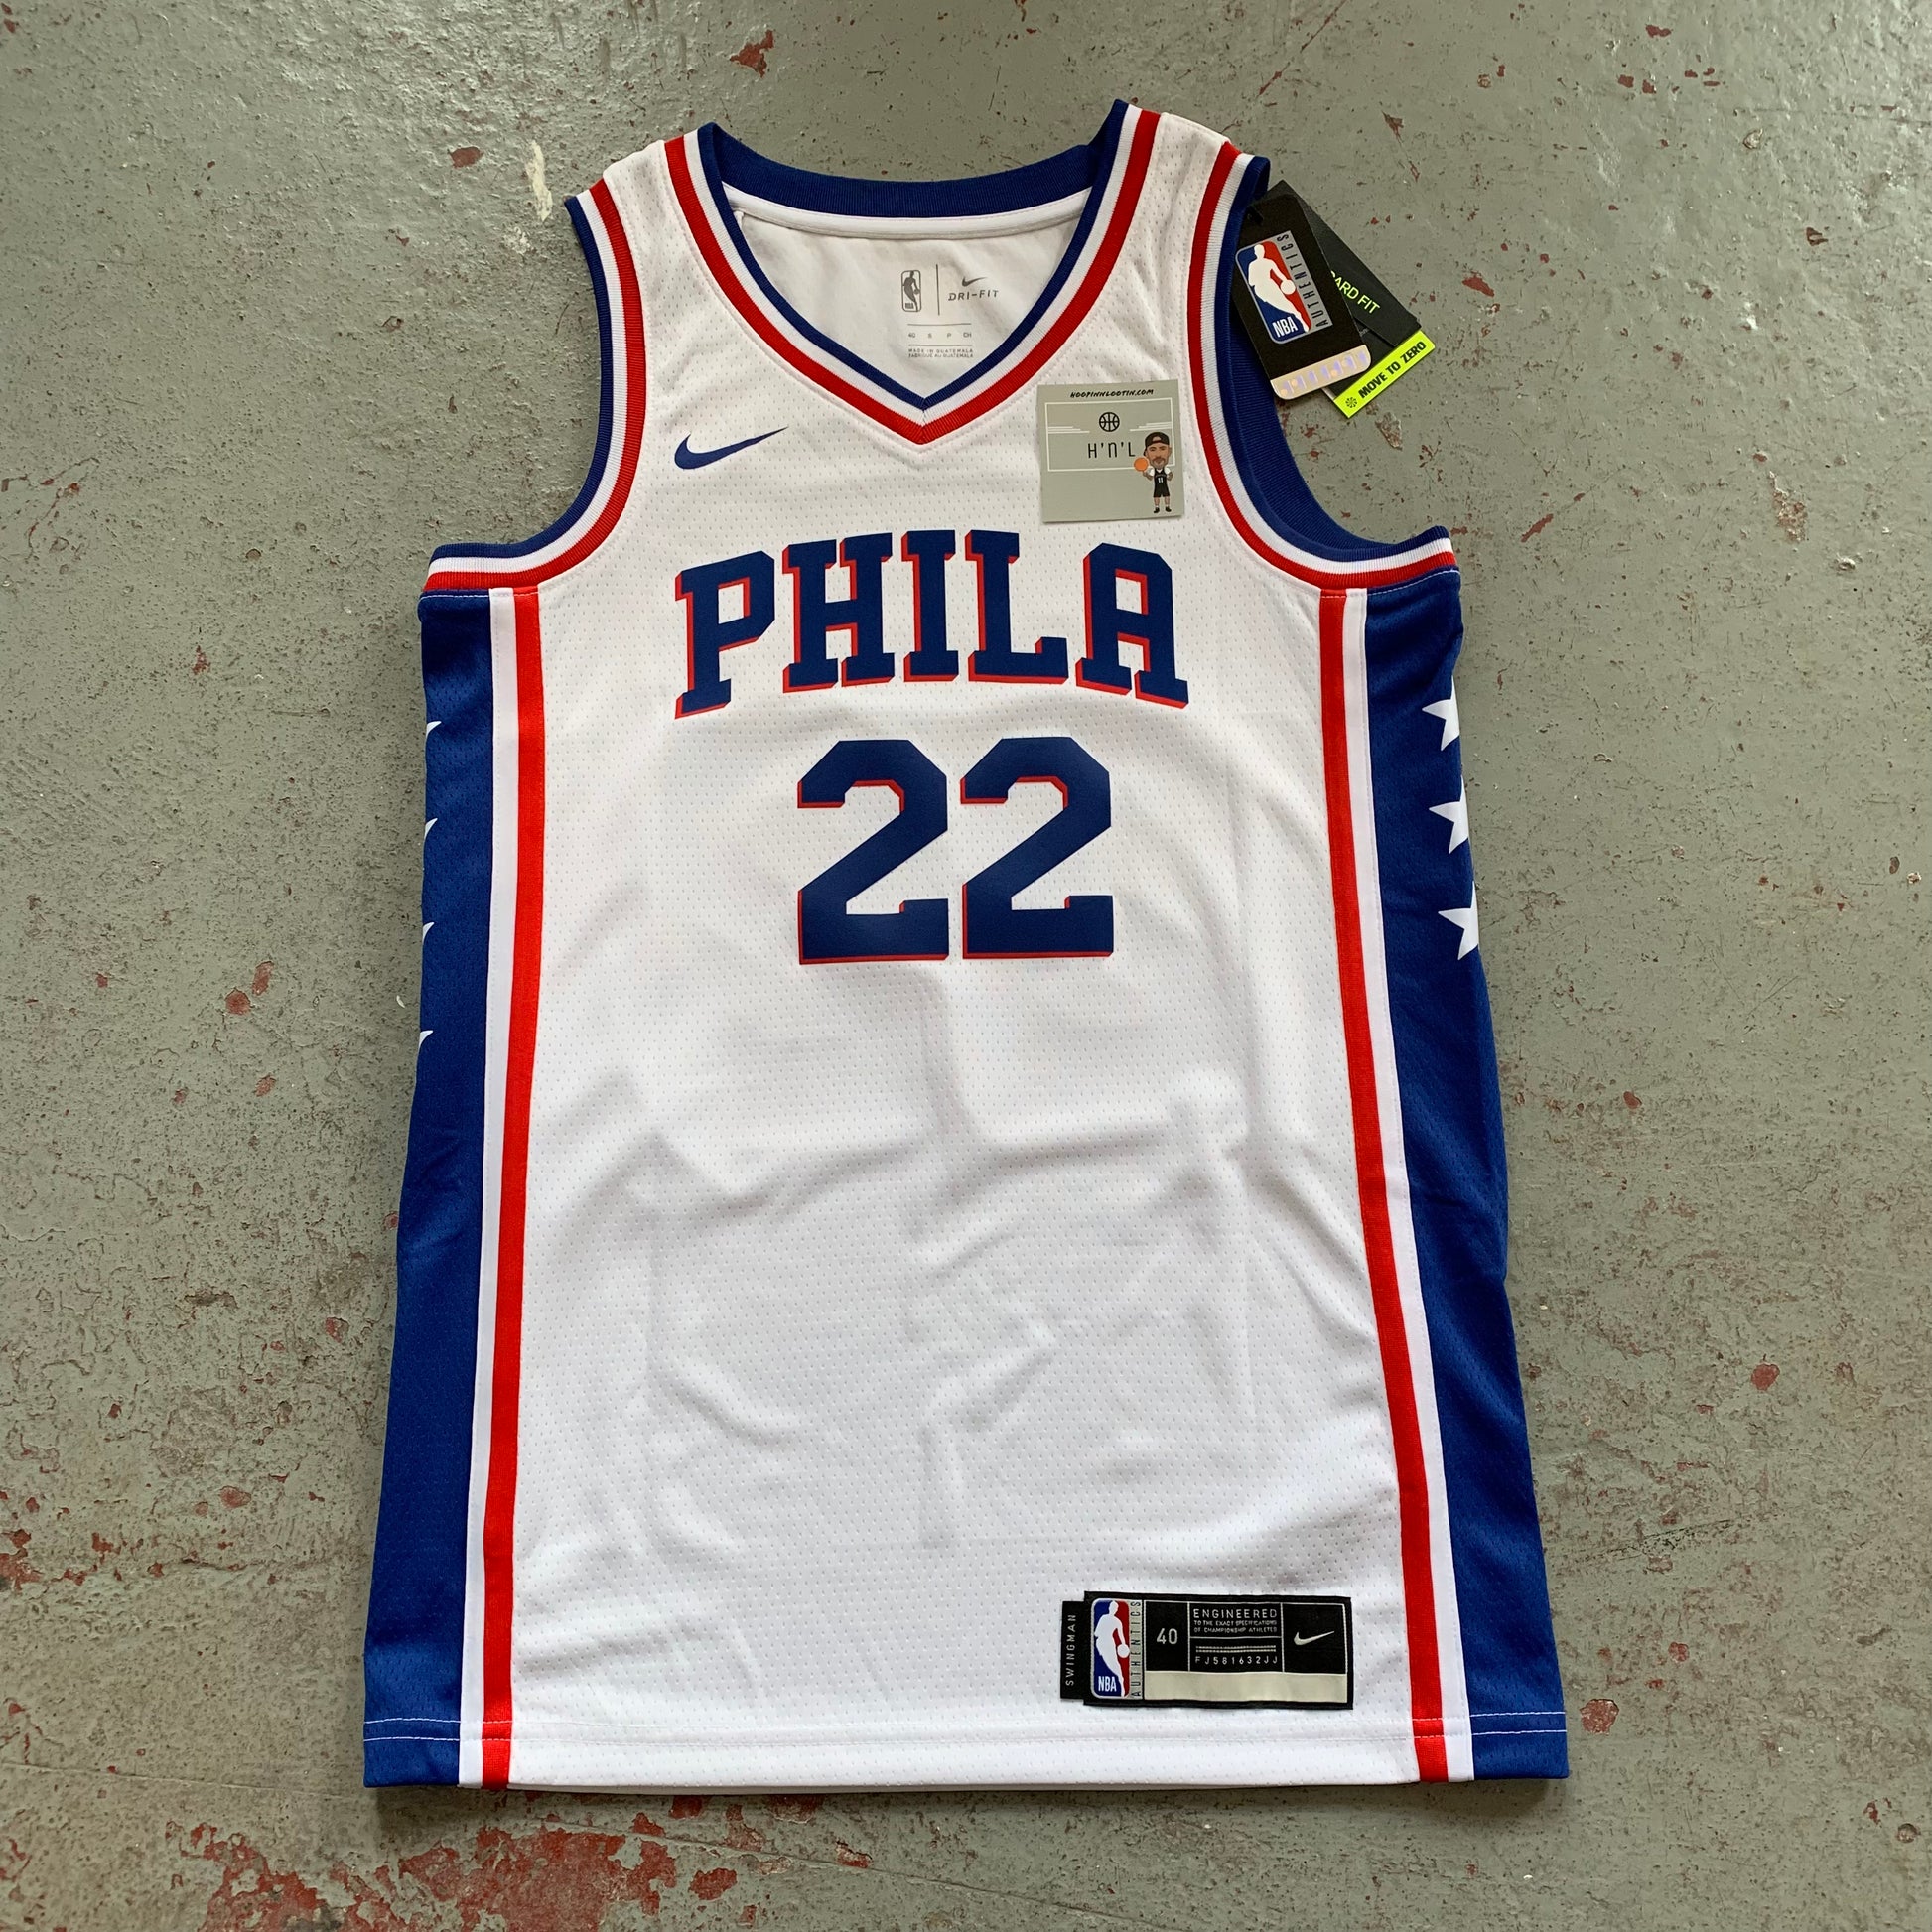 LOOK: Philadelphia 76ers reveal swanky new 'Statement' jerseys